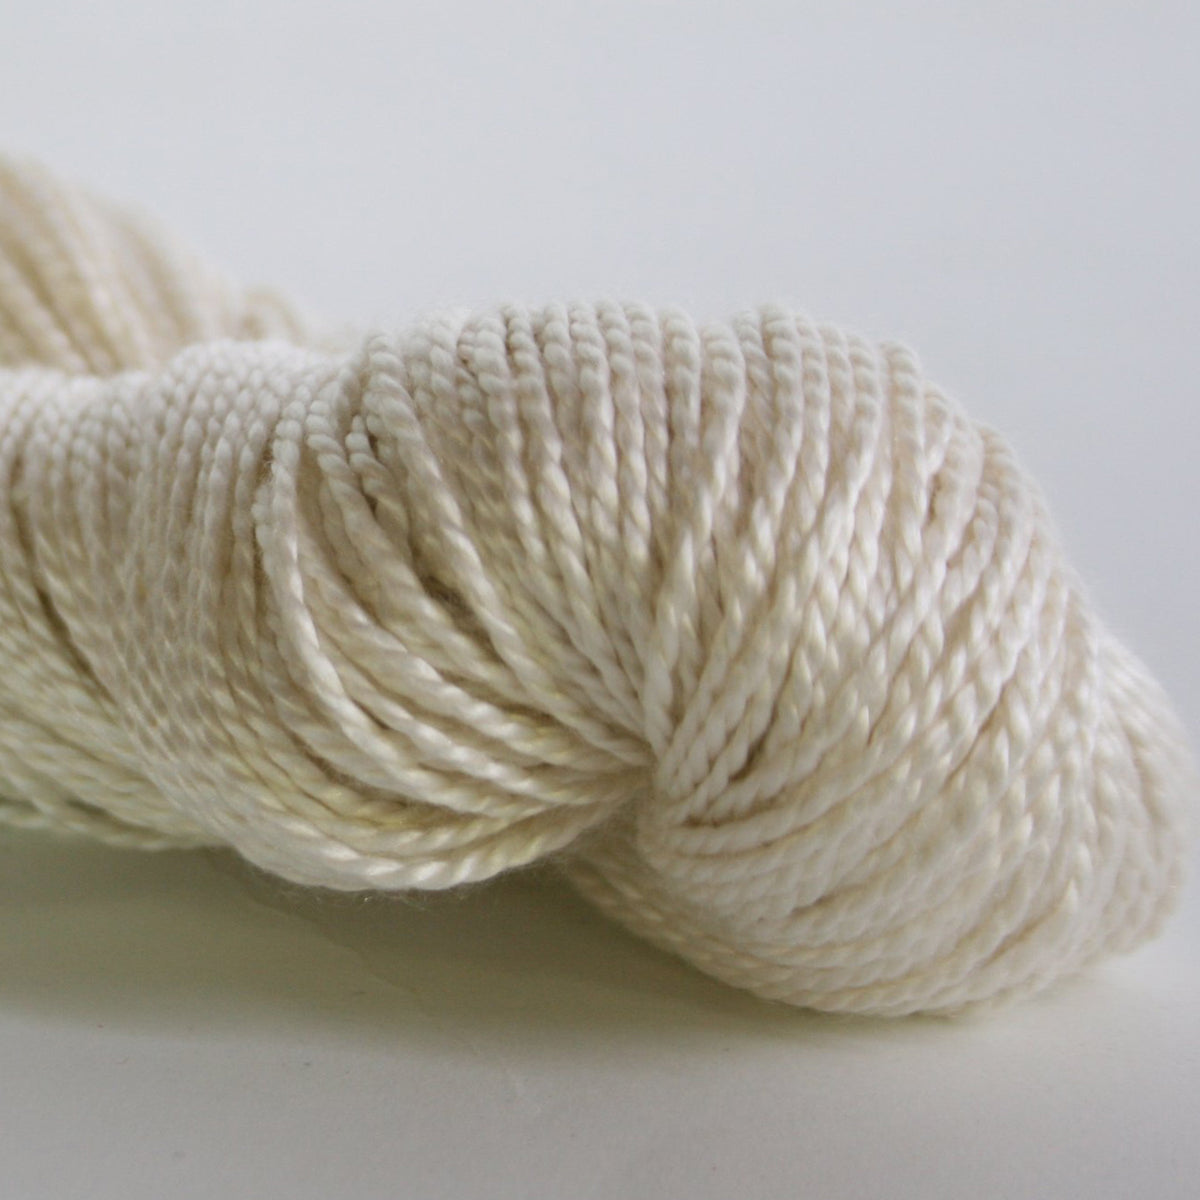 Yarn: Undyed Merino Blend, 100% Wool, 4 Ply, 250g – YardandYarn